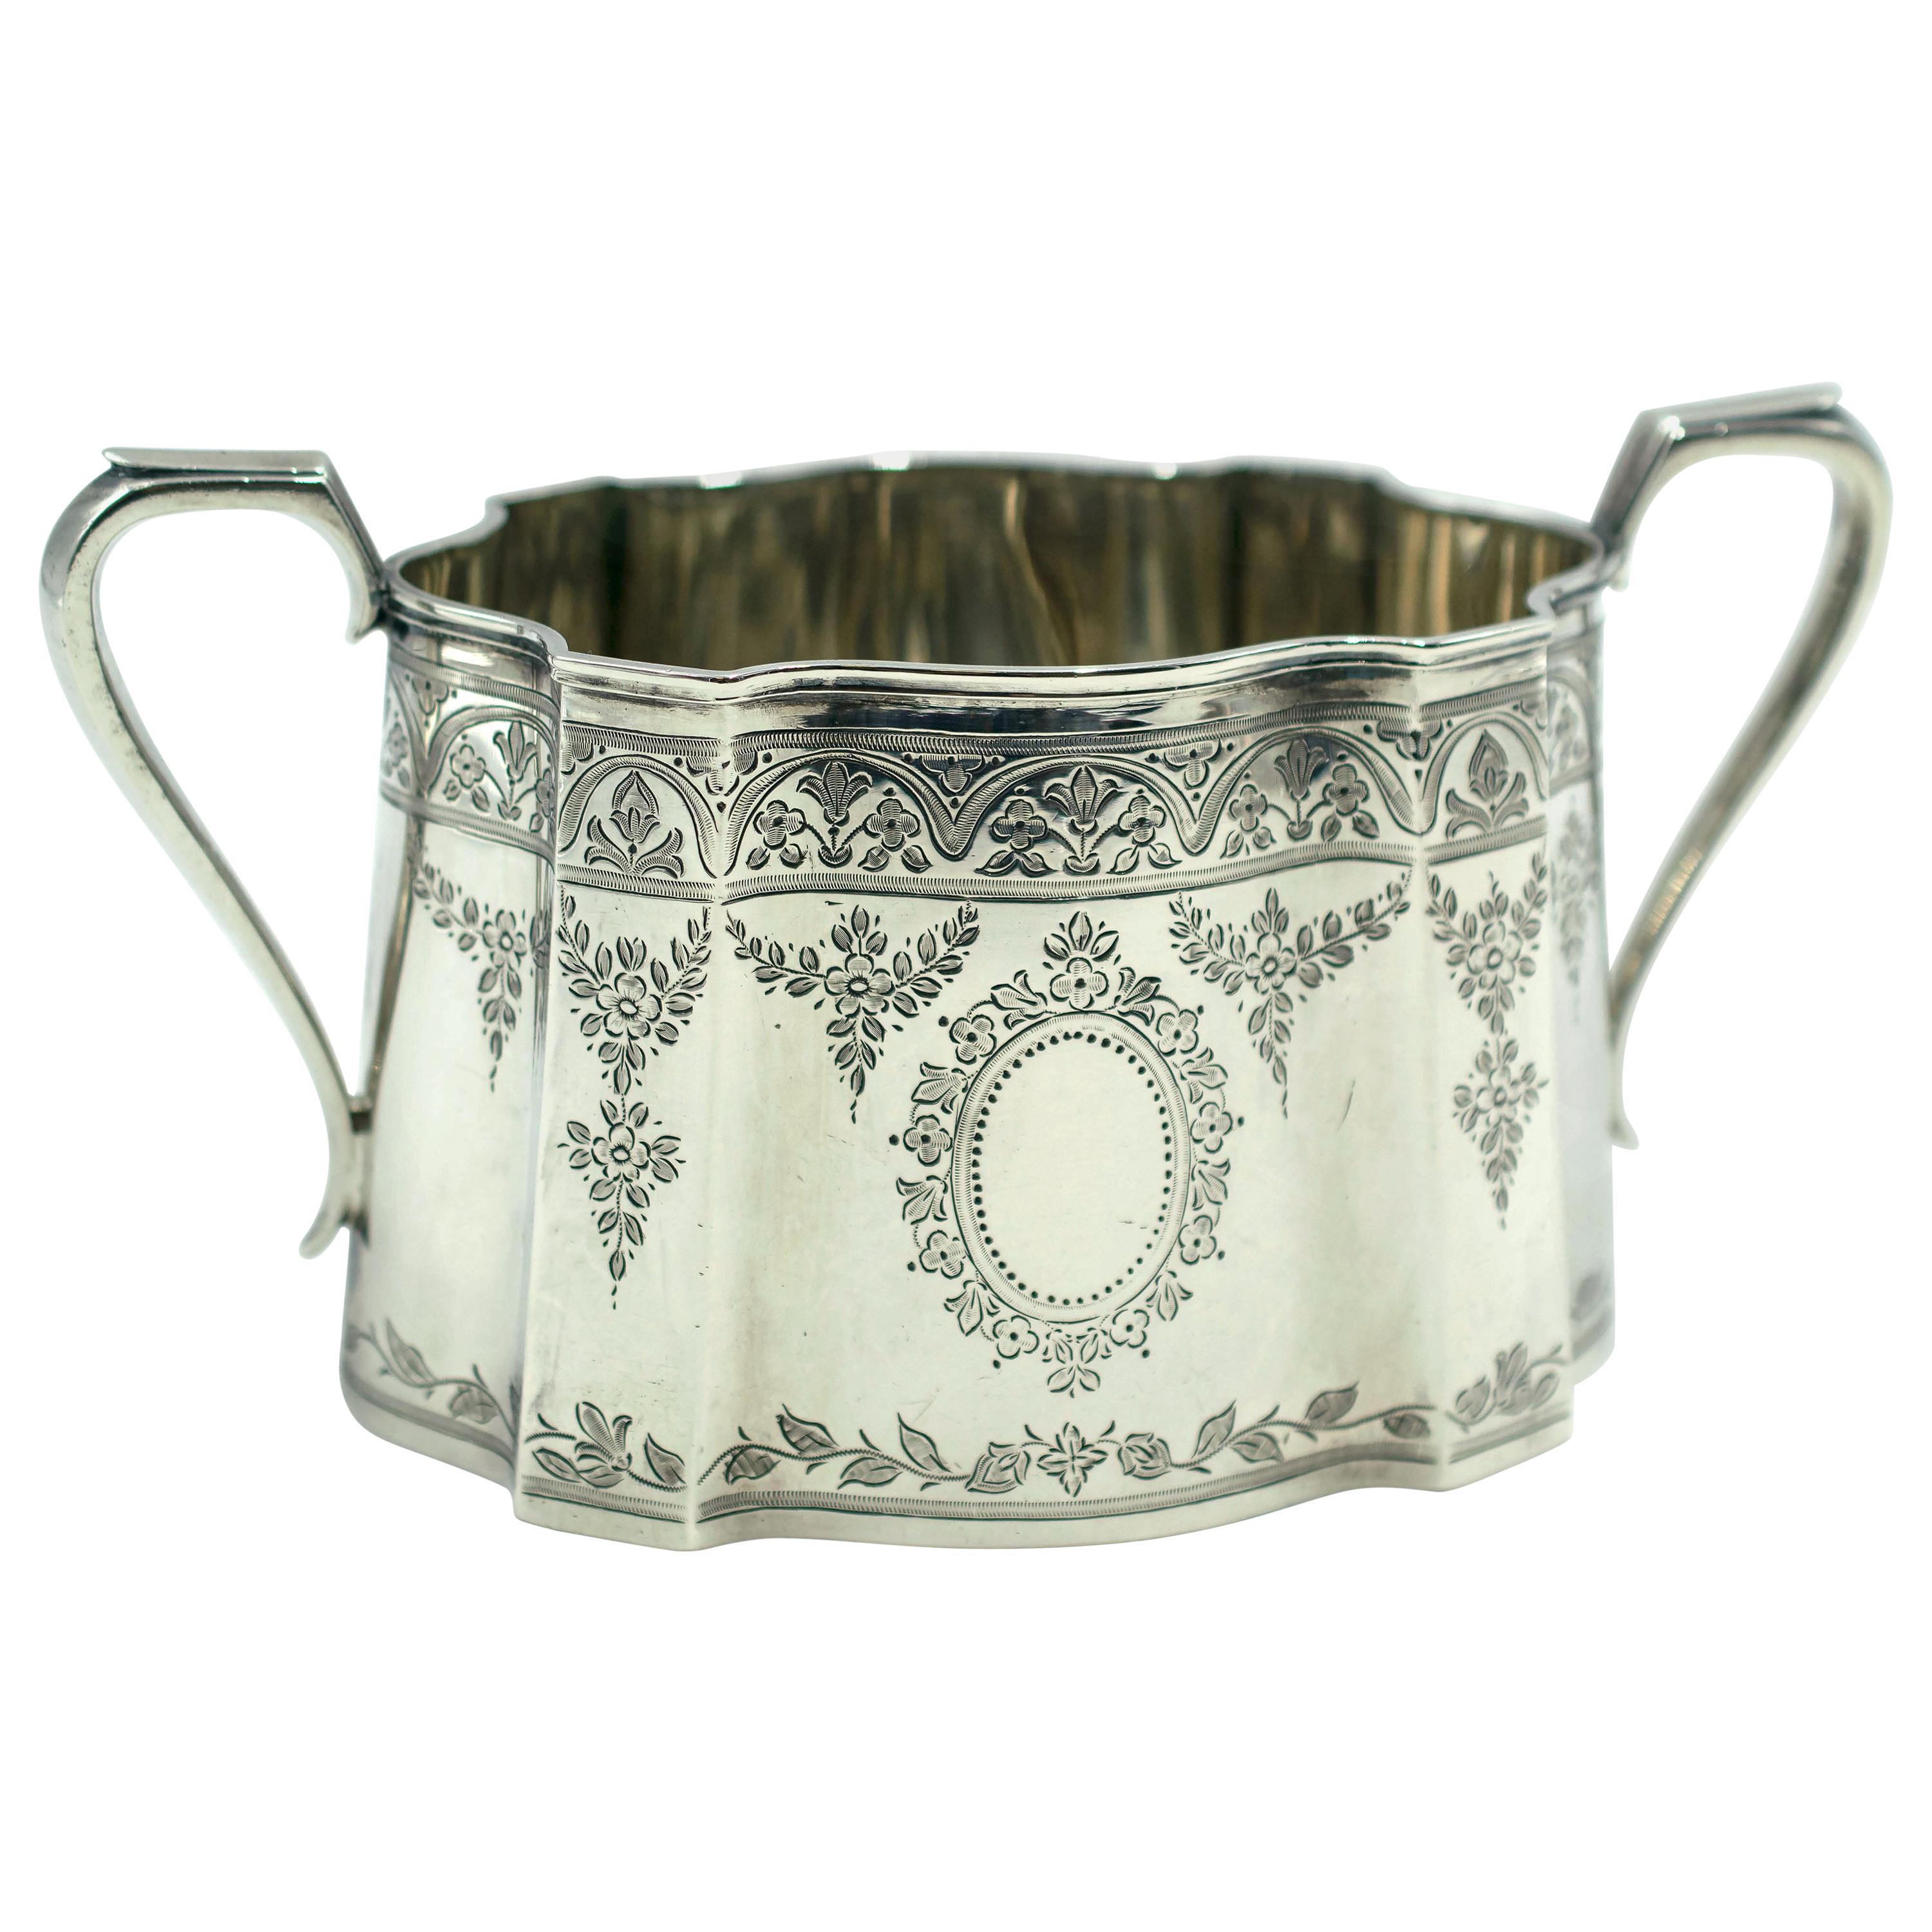 Sugar Bowl aus Silber im Vintage-Stil, 20. Jahrhundert